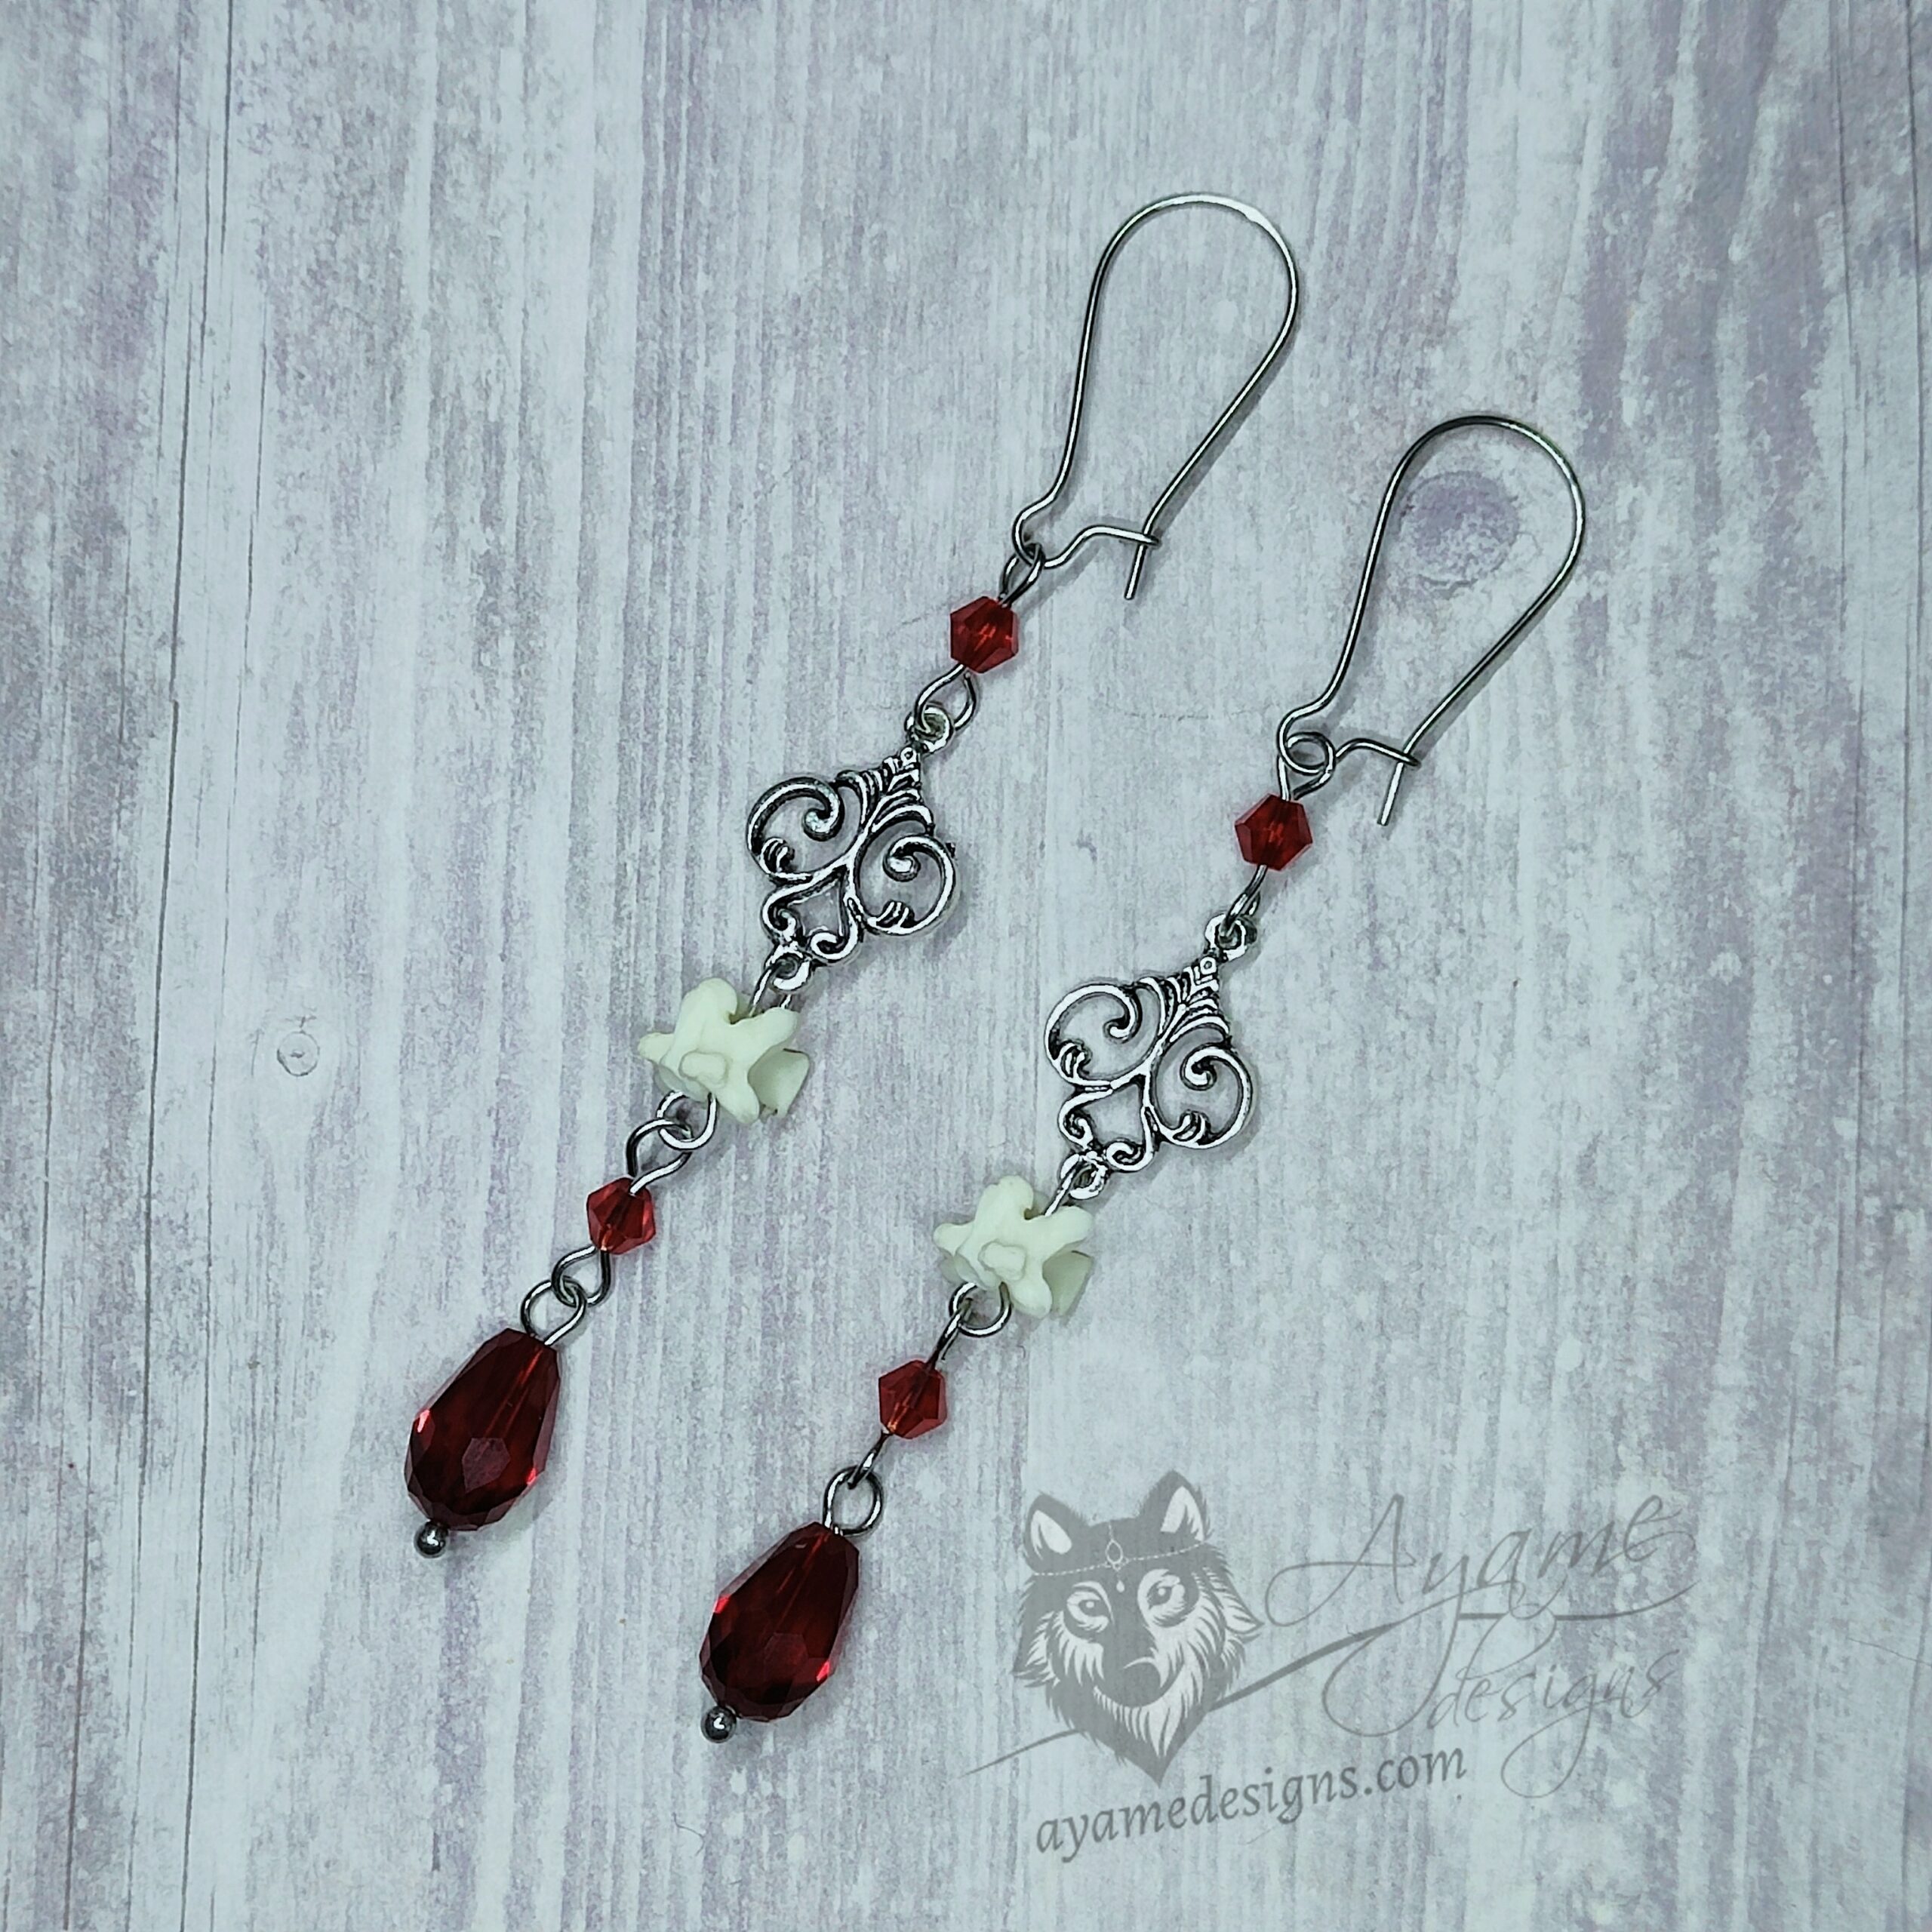 Handmade Victorian gothic earrings with filigrees, tiny snake vertebrae and red Austrian crystal beads on stainless steel earring hooks